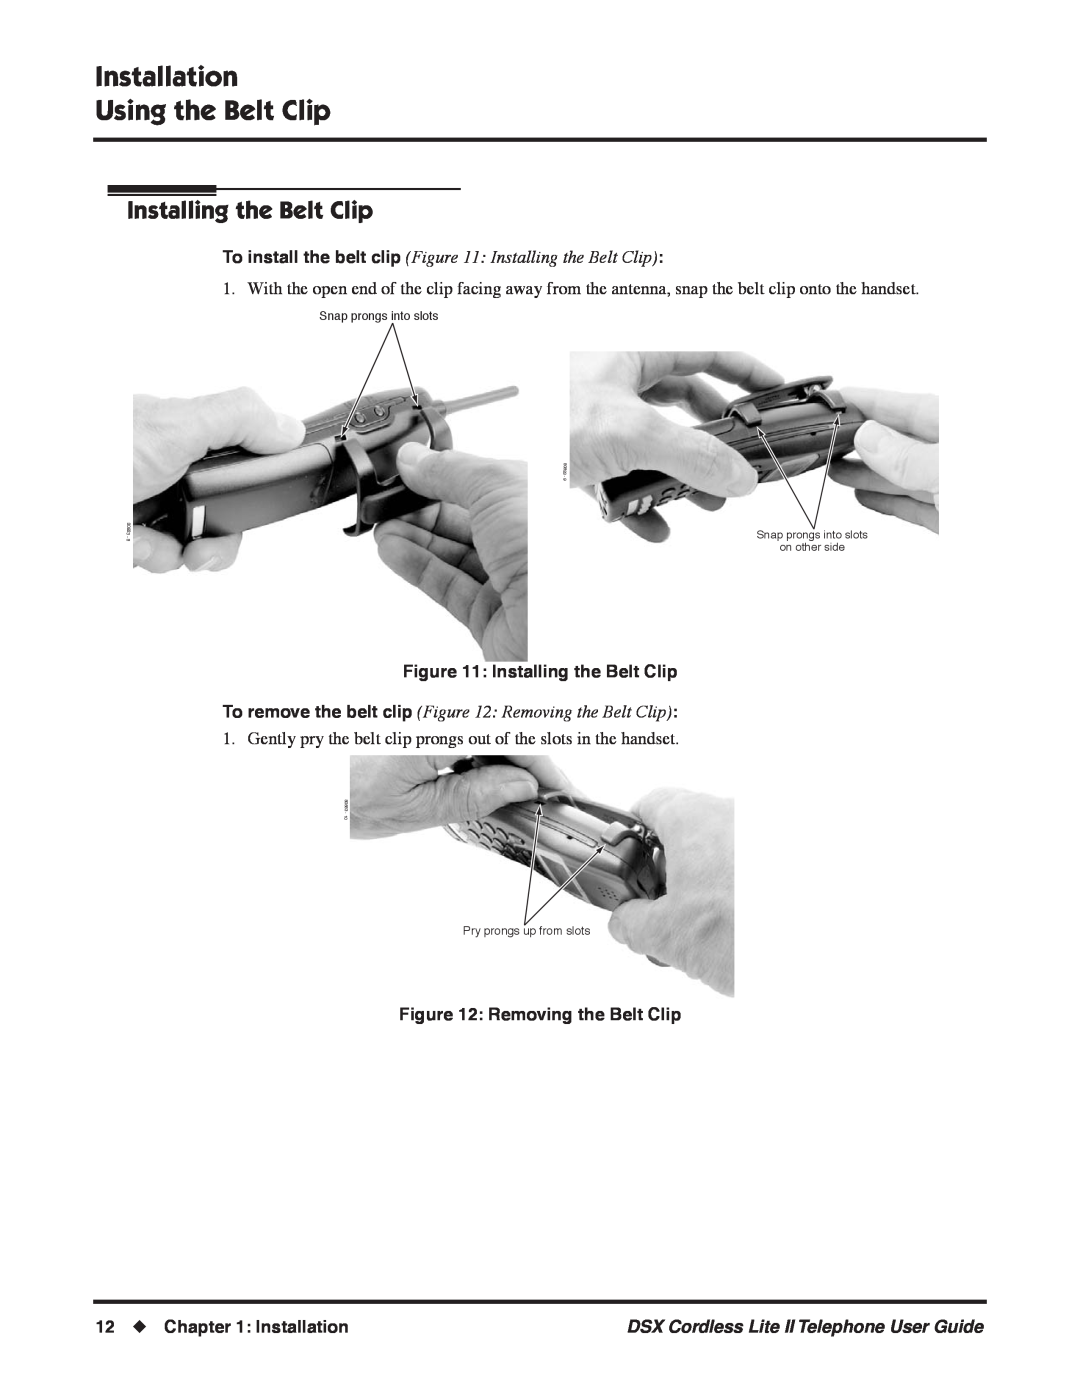 NEC N 1093092, P manual Installation Using the Belt Clip, Installing the Belt Clip, Removing the Belt Clip 